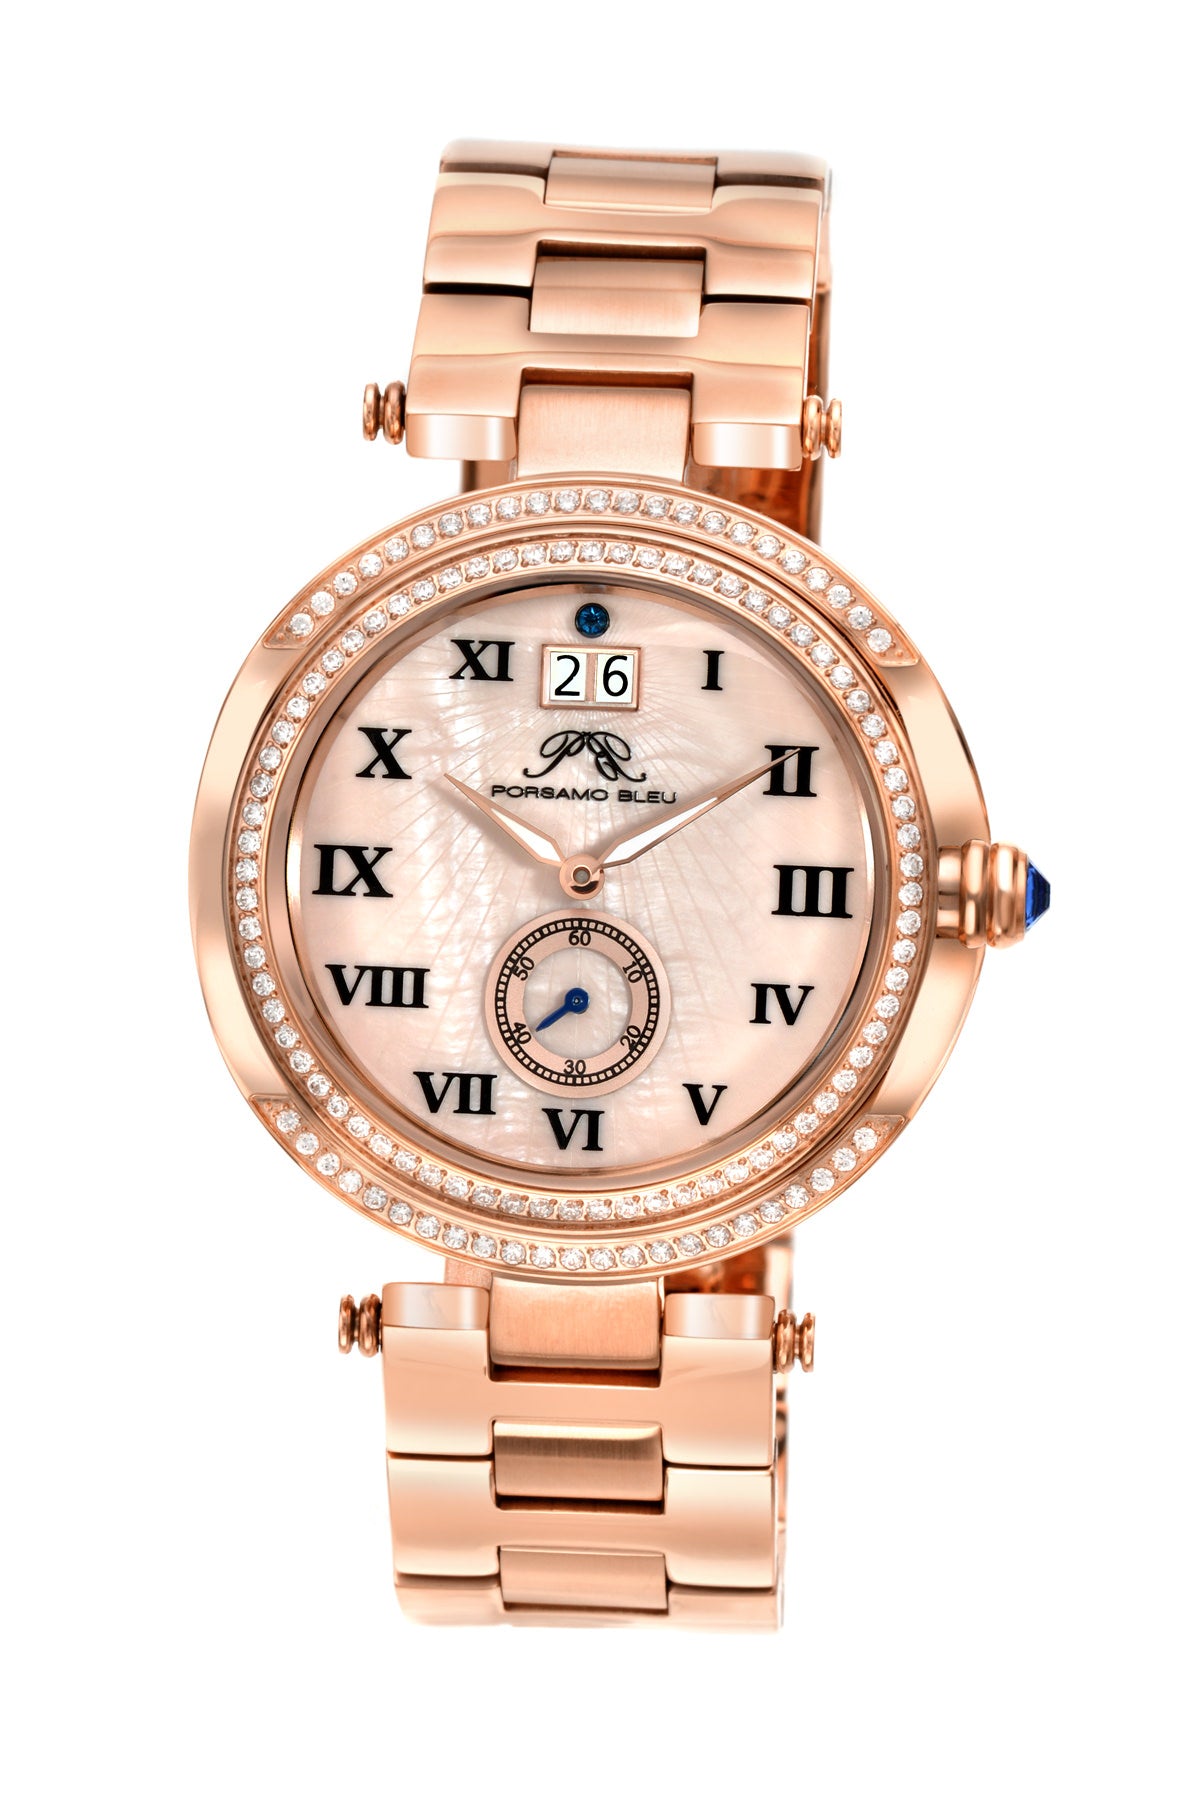 Porsamo Bleu South Sea Crystal luxury women's stainless steel watch, rose 104ASSC